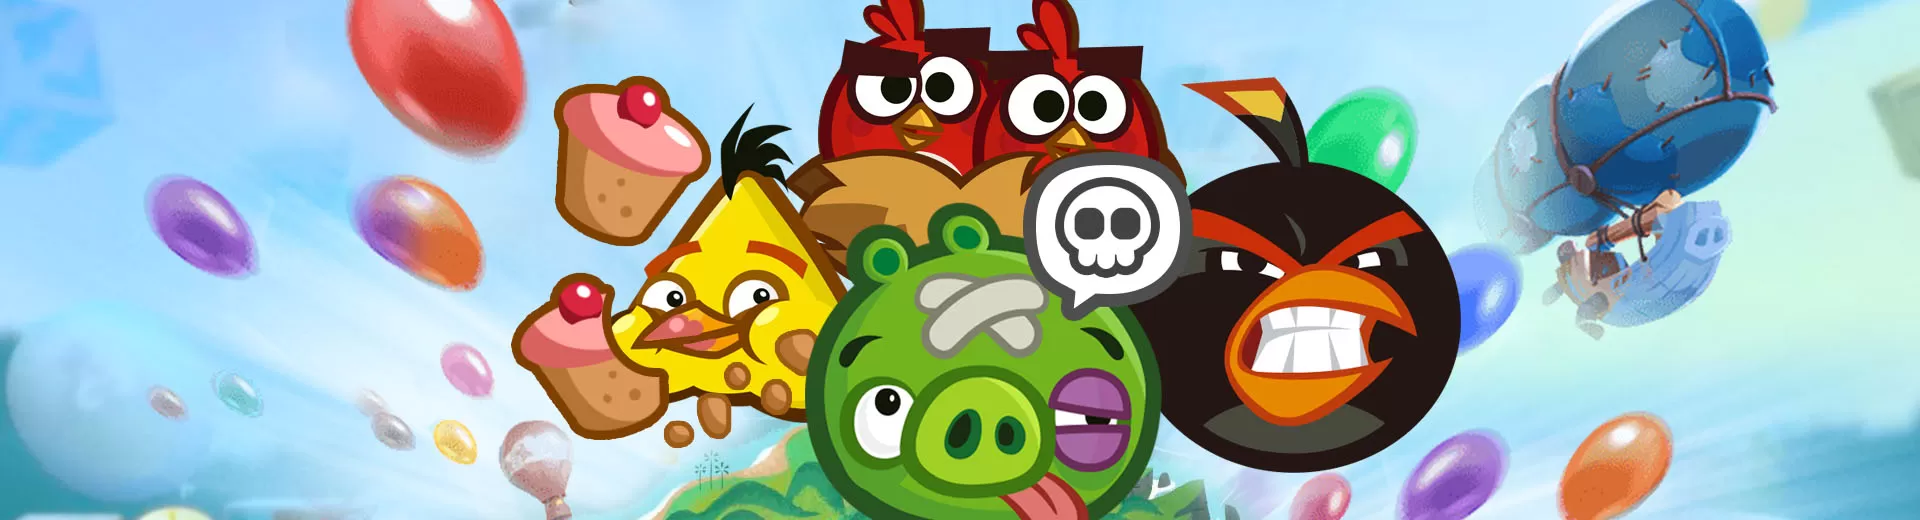 Angry Birds Blast Emulator Pc